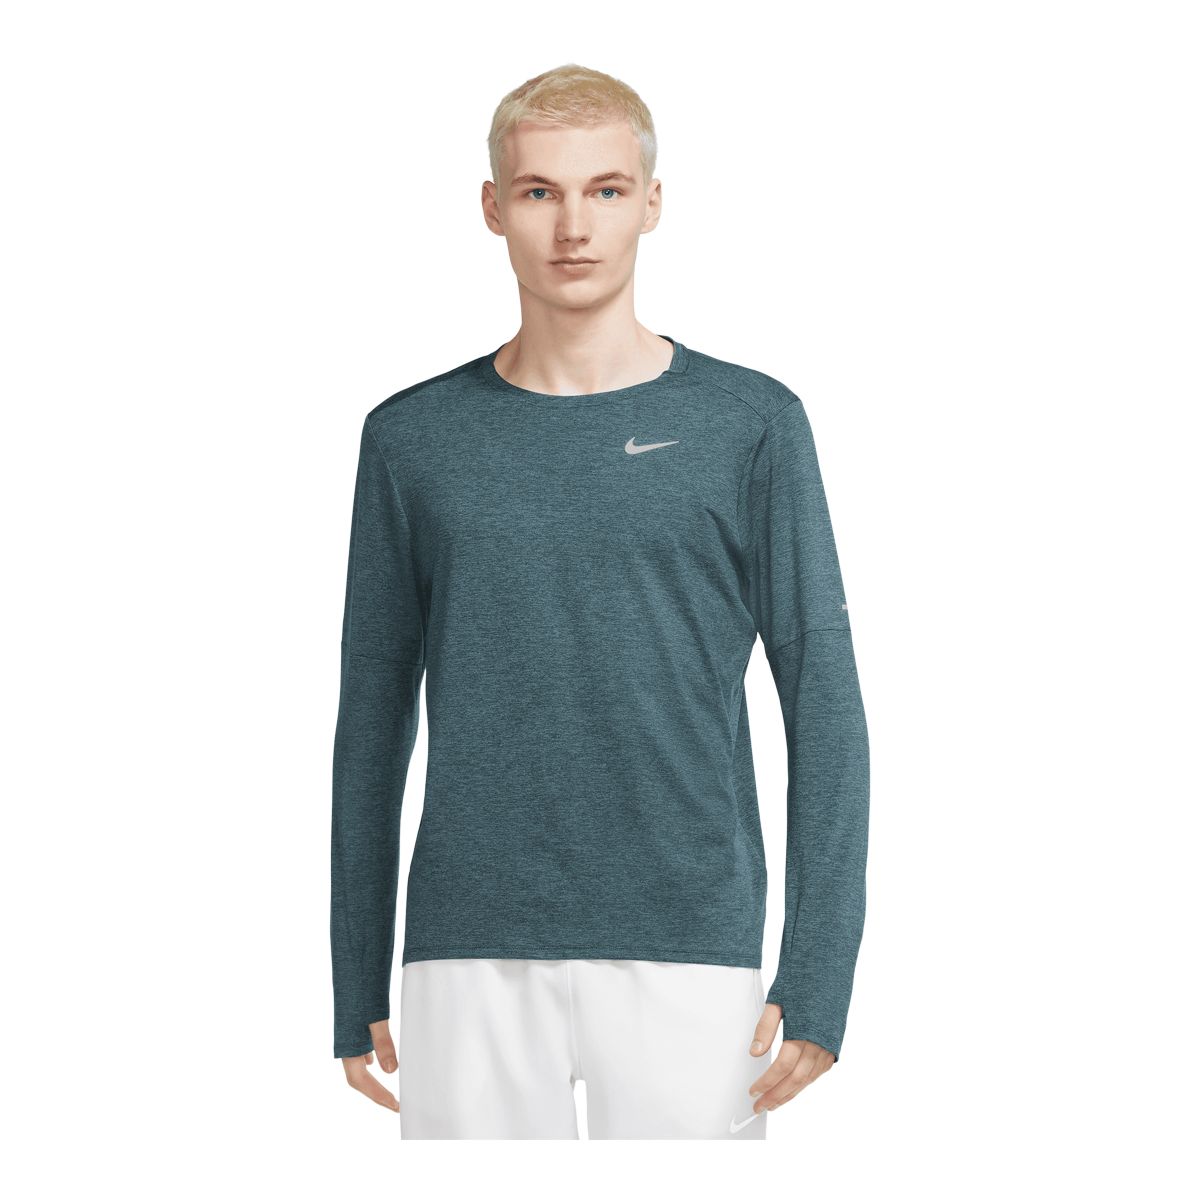 Nike Men's Element Sweatshirt